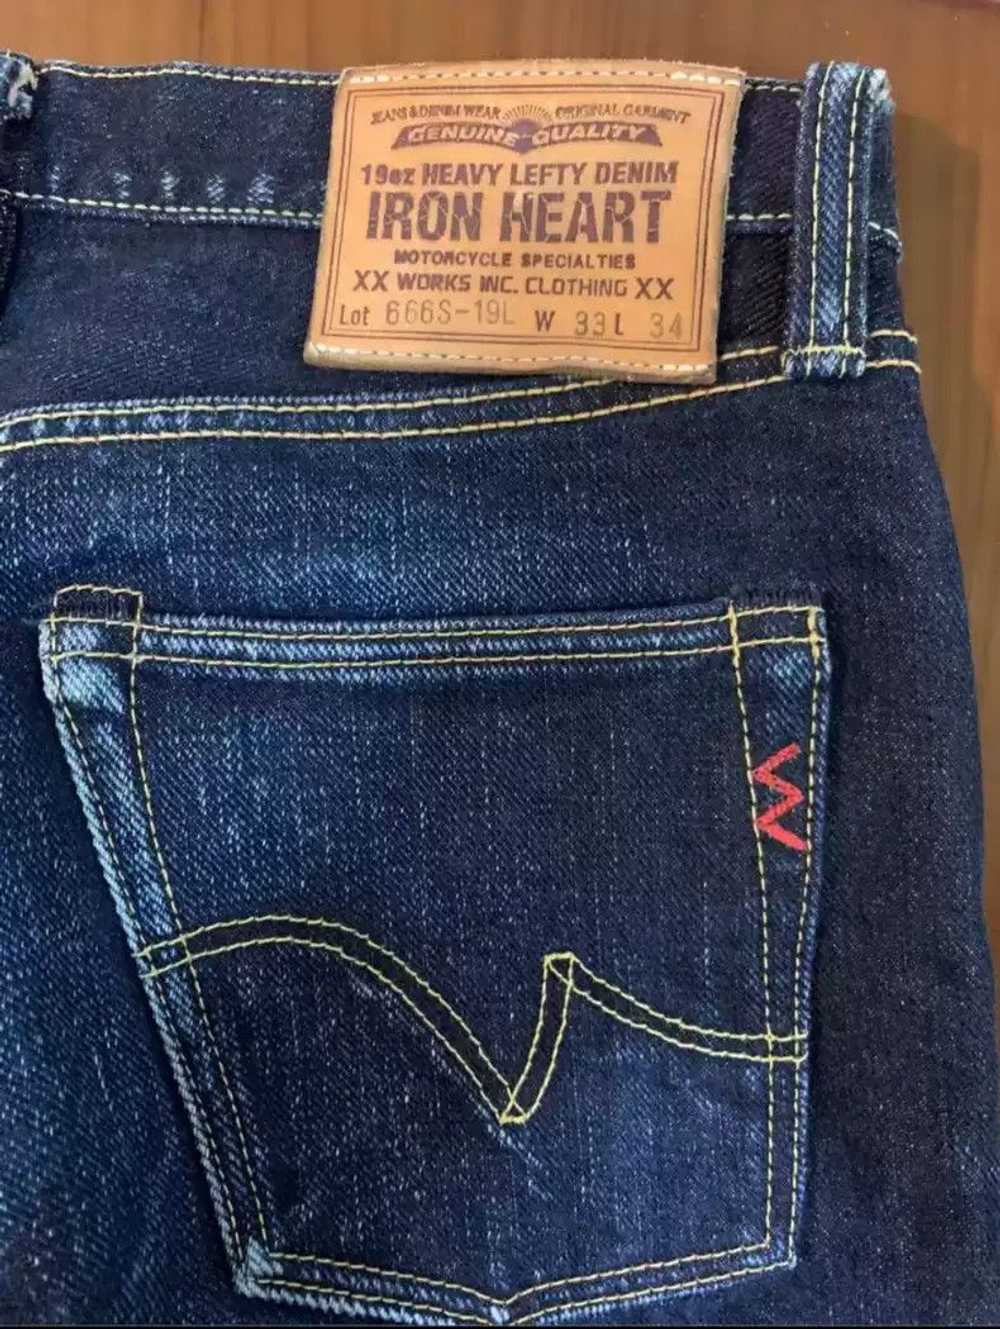 Iron Heart IRON HEART 666S-19oz jeans - image 7